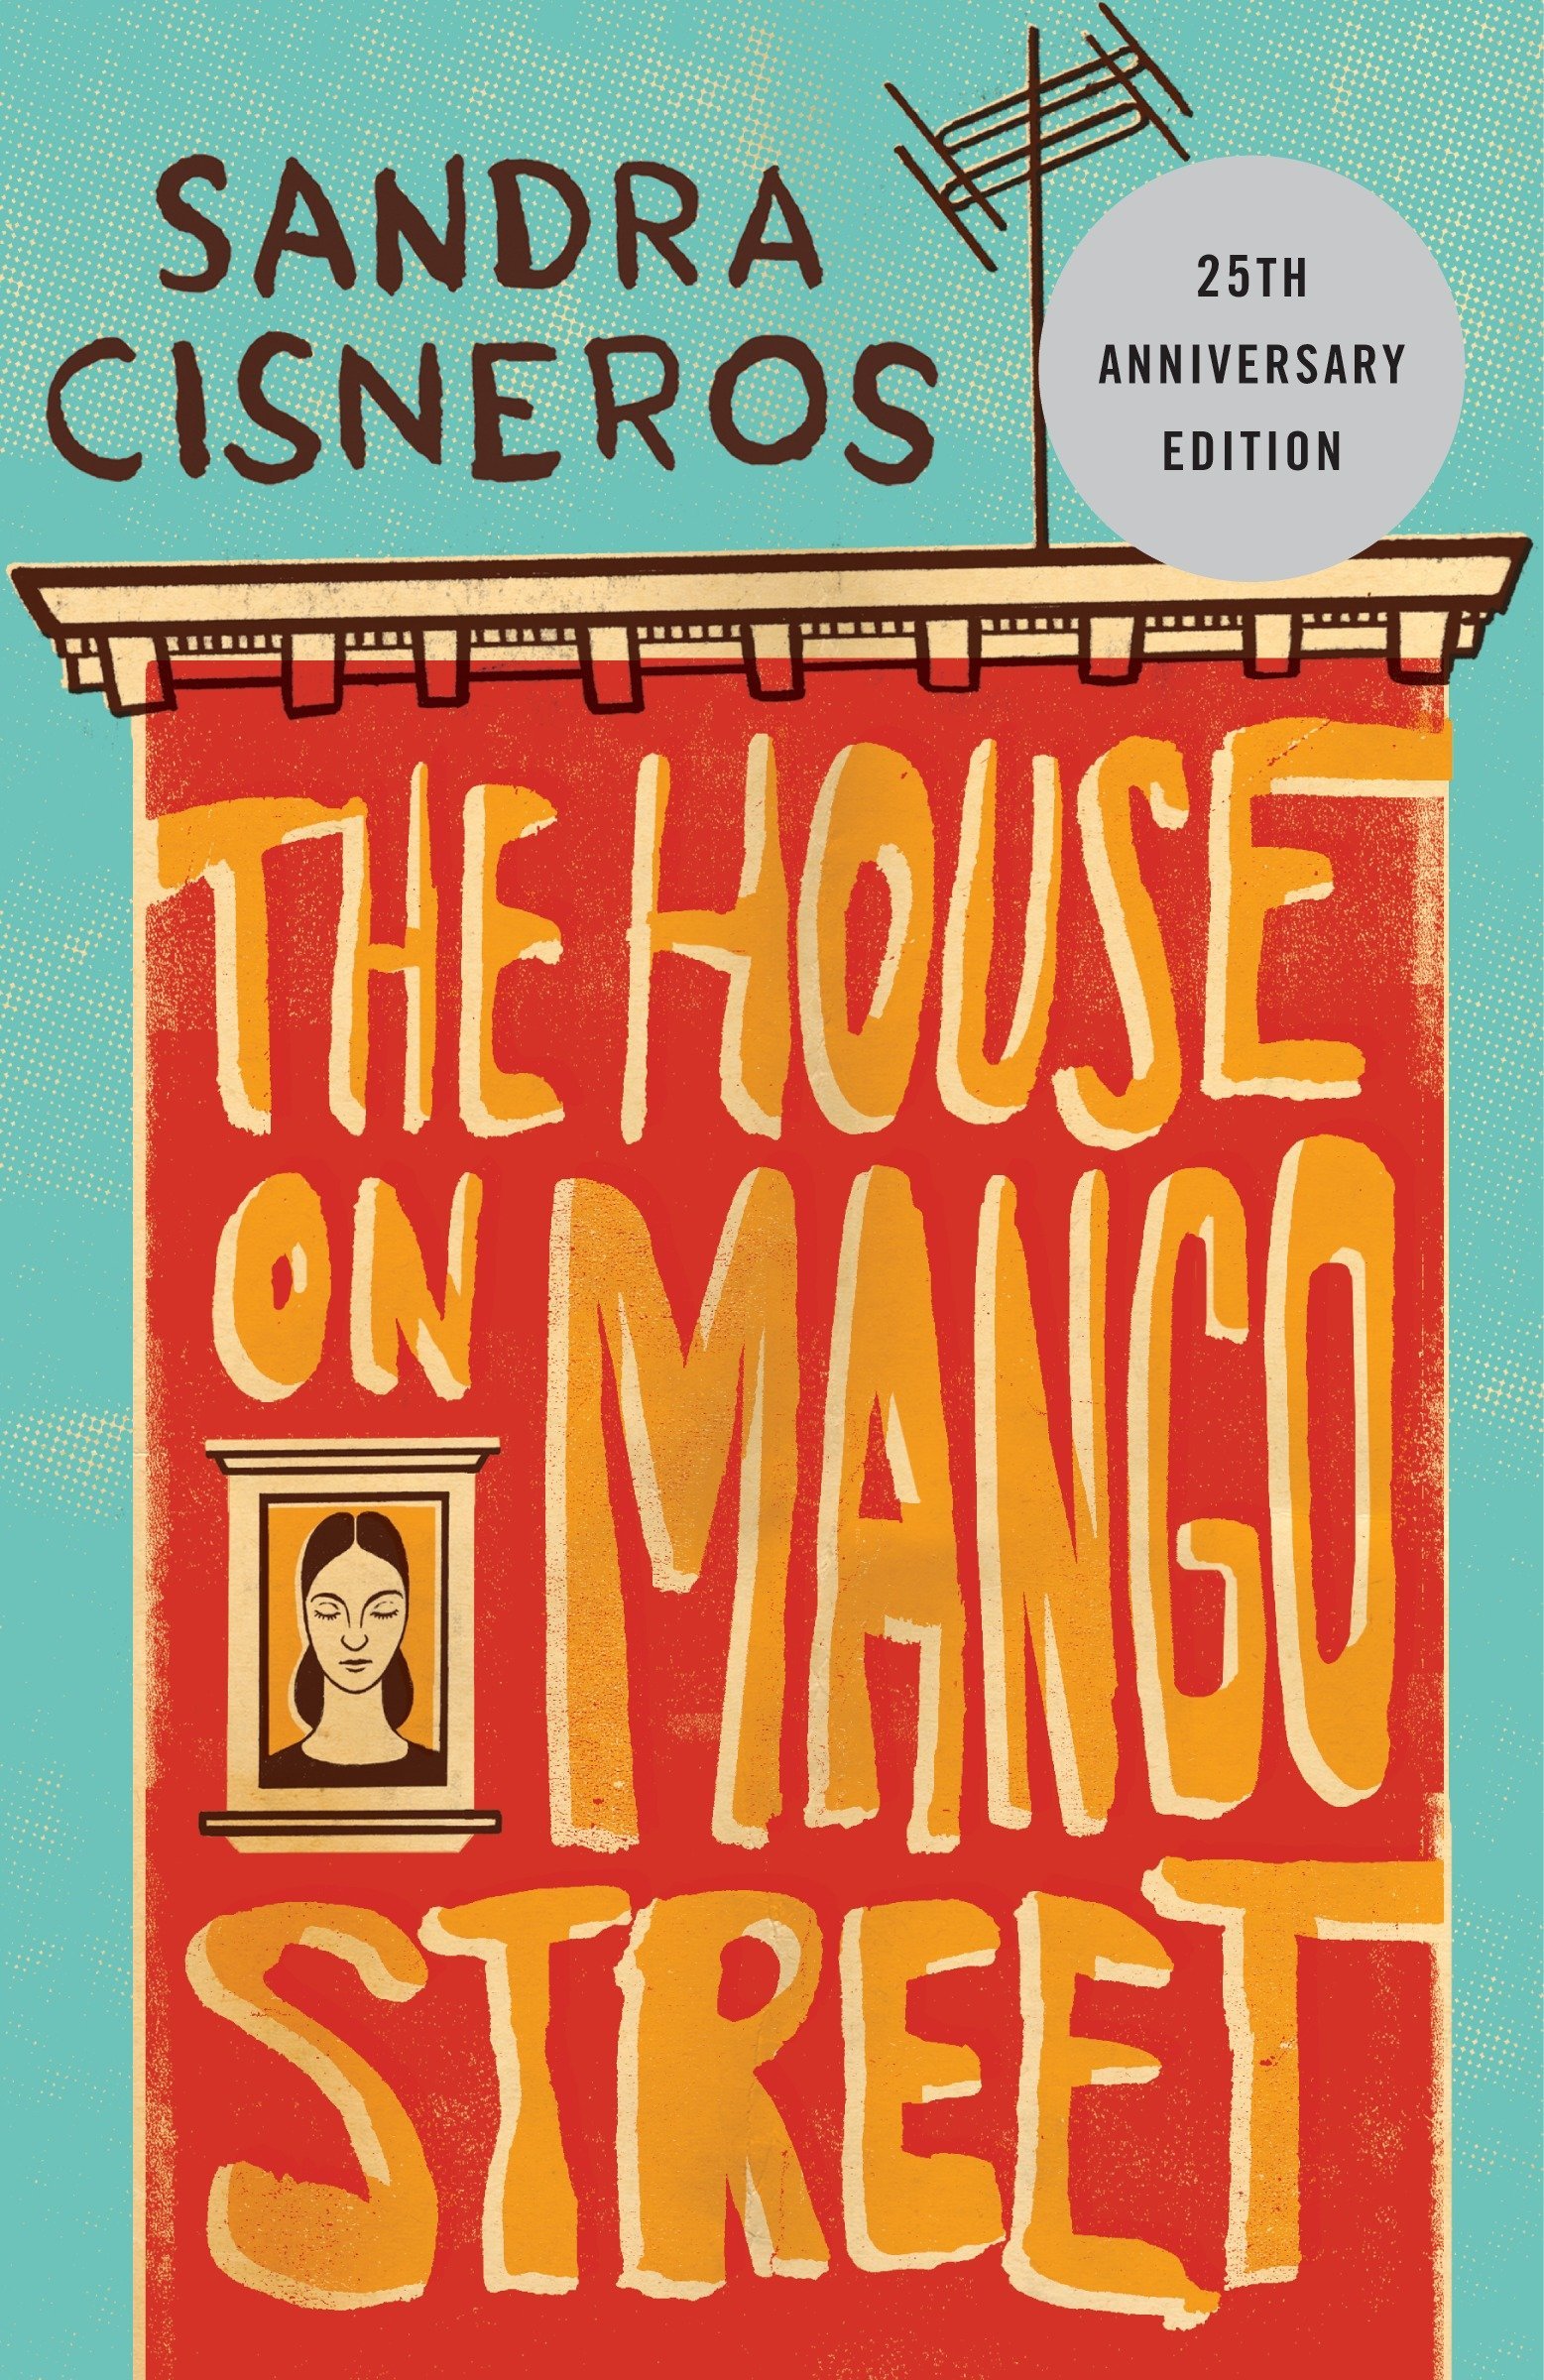 Sandra Cisneros, The House on Mango Street